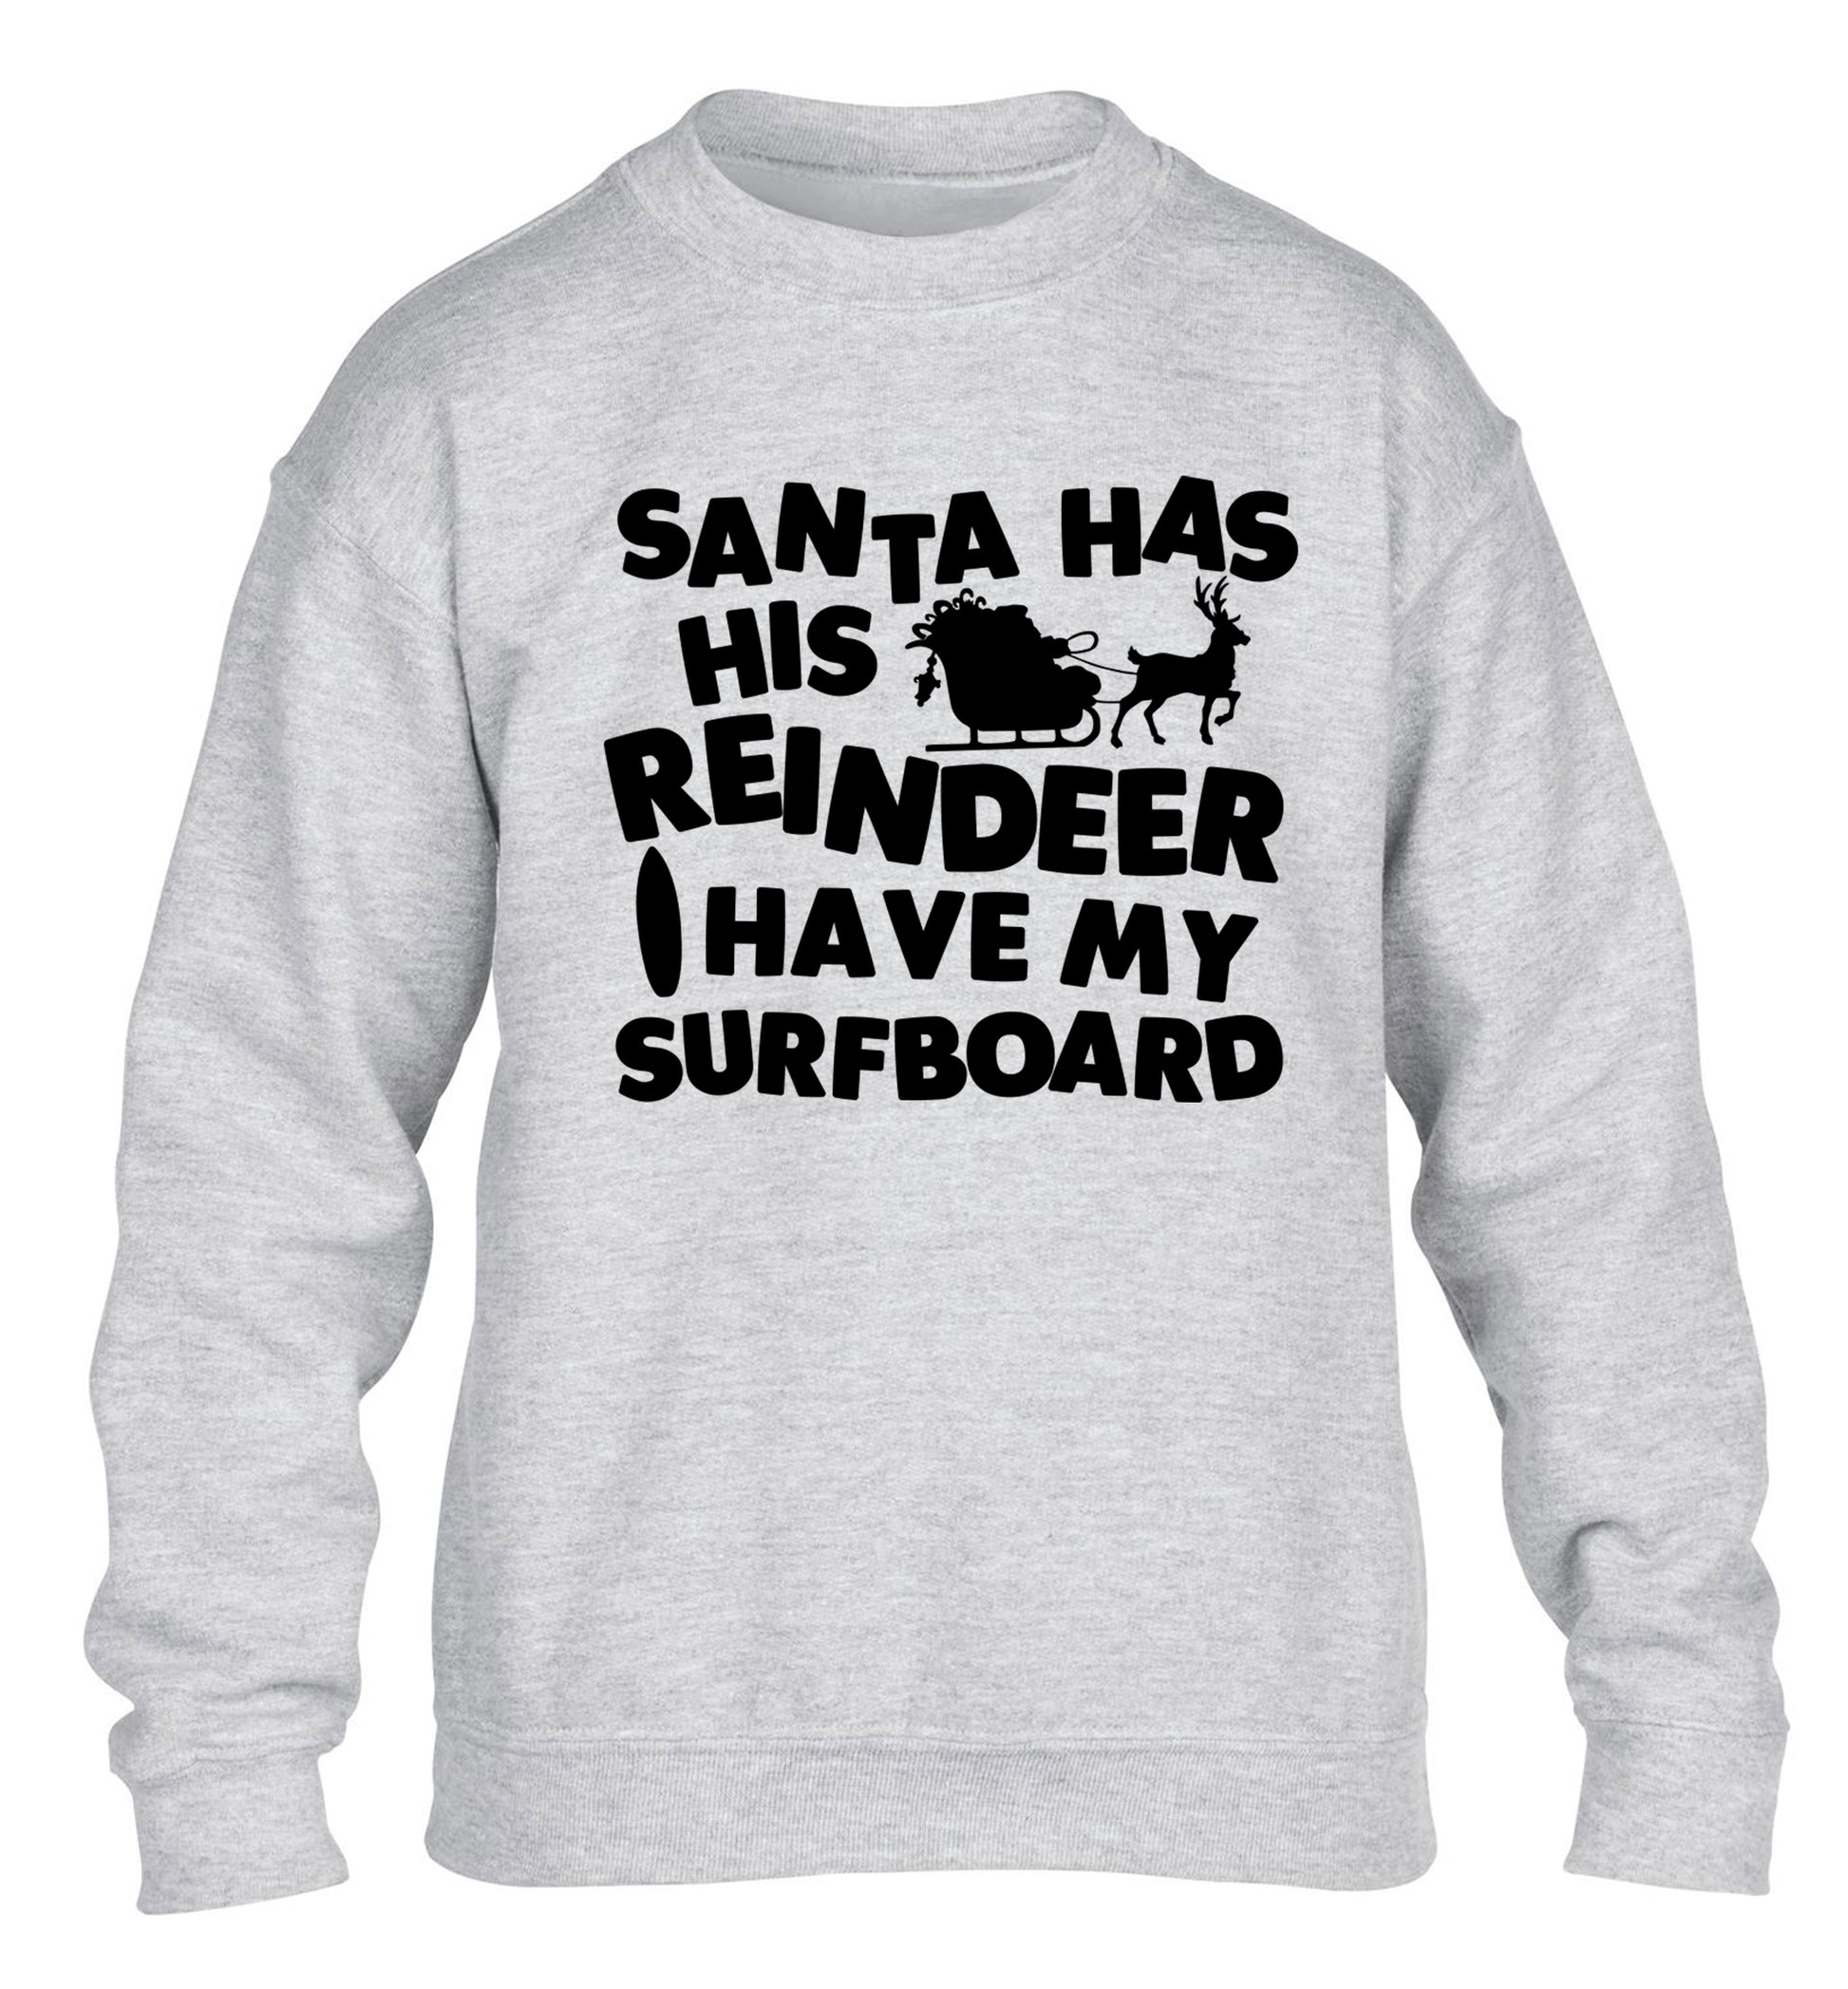 Santa has his reindeer I have my surfboard children's grey sweater 12-14 Years